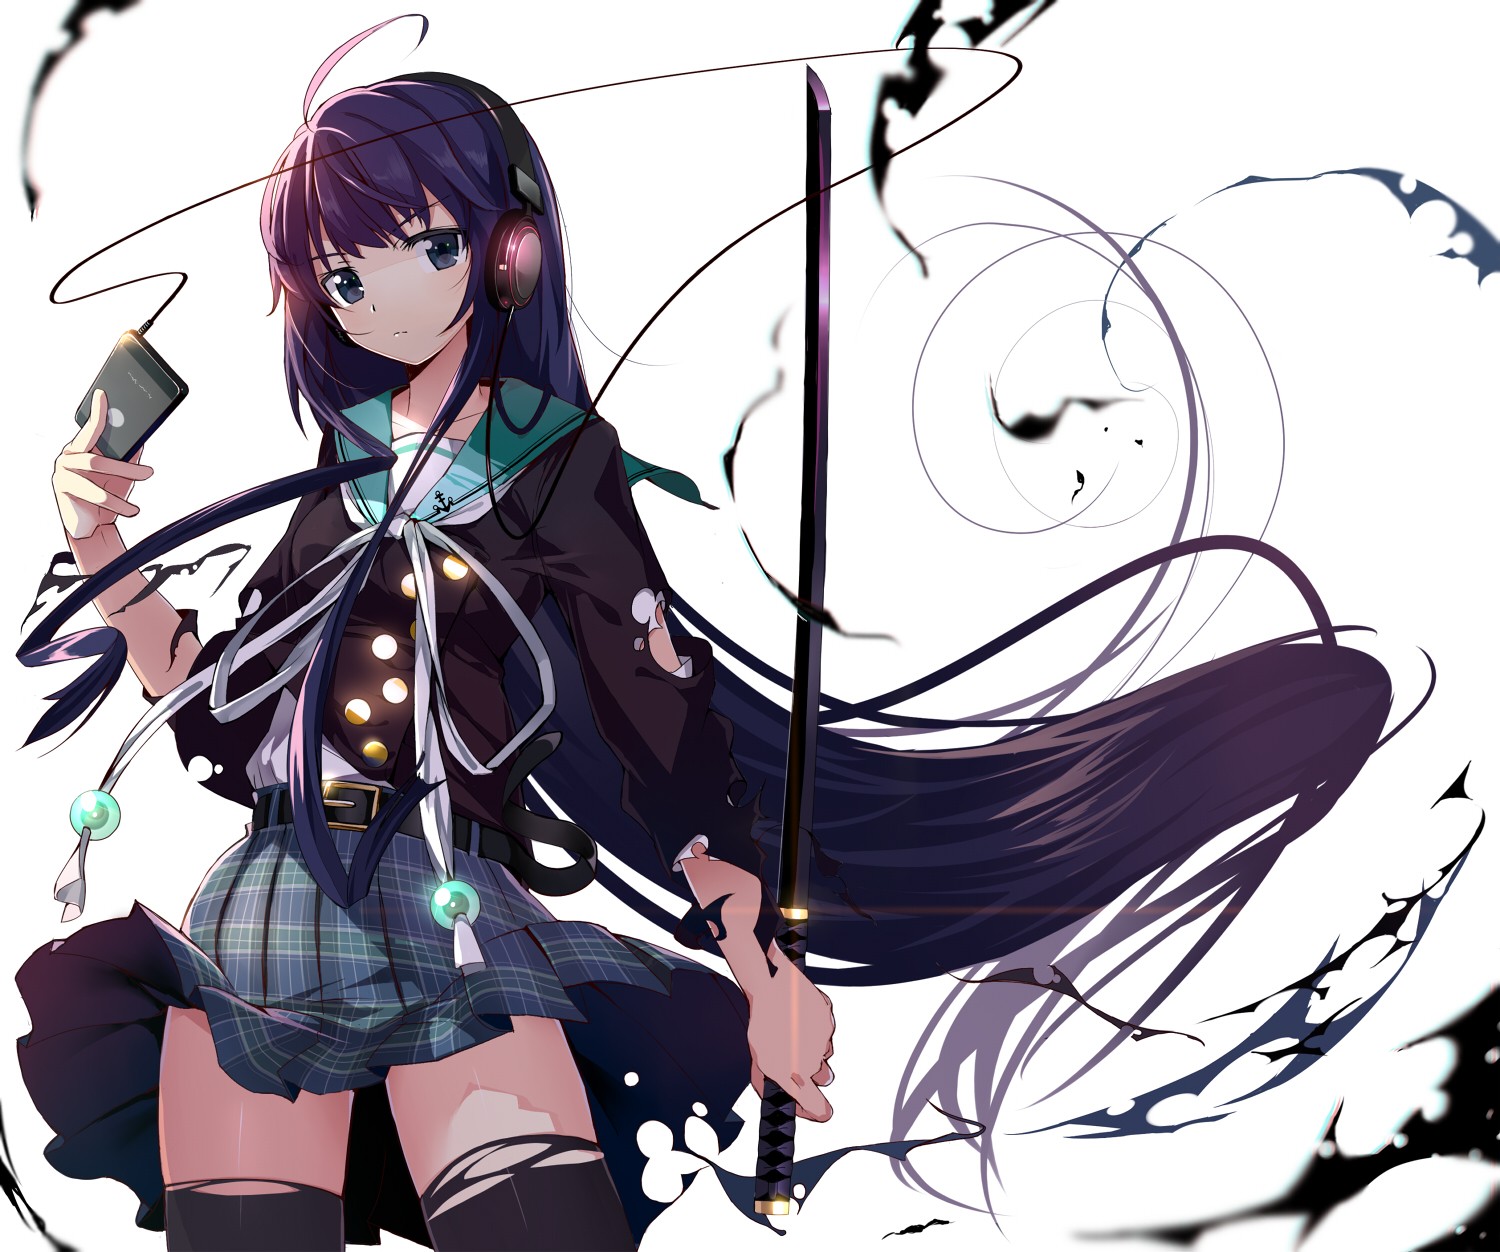 Anime 1500x1252 anime girls original characters school uniform katana headphones skirt women with swords sword weapon purple hair